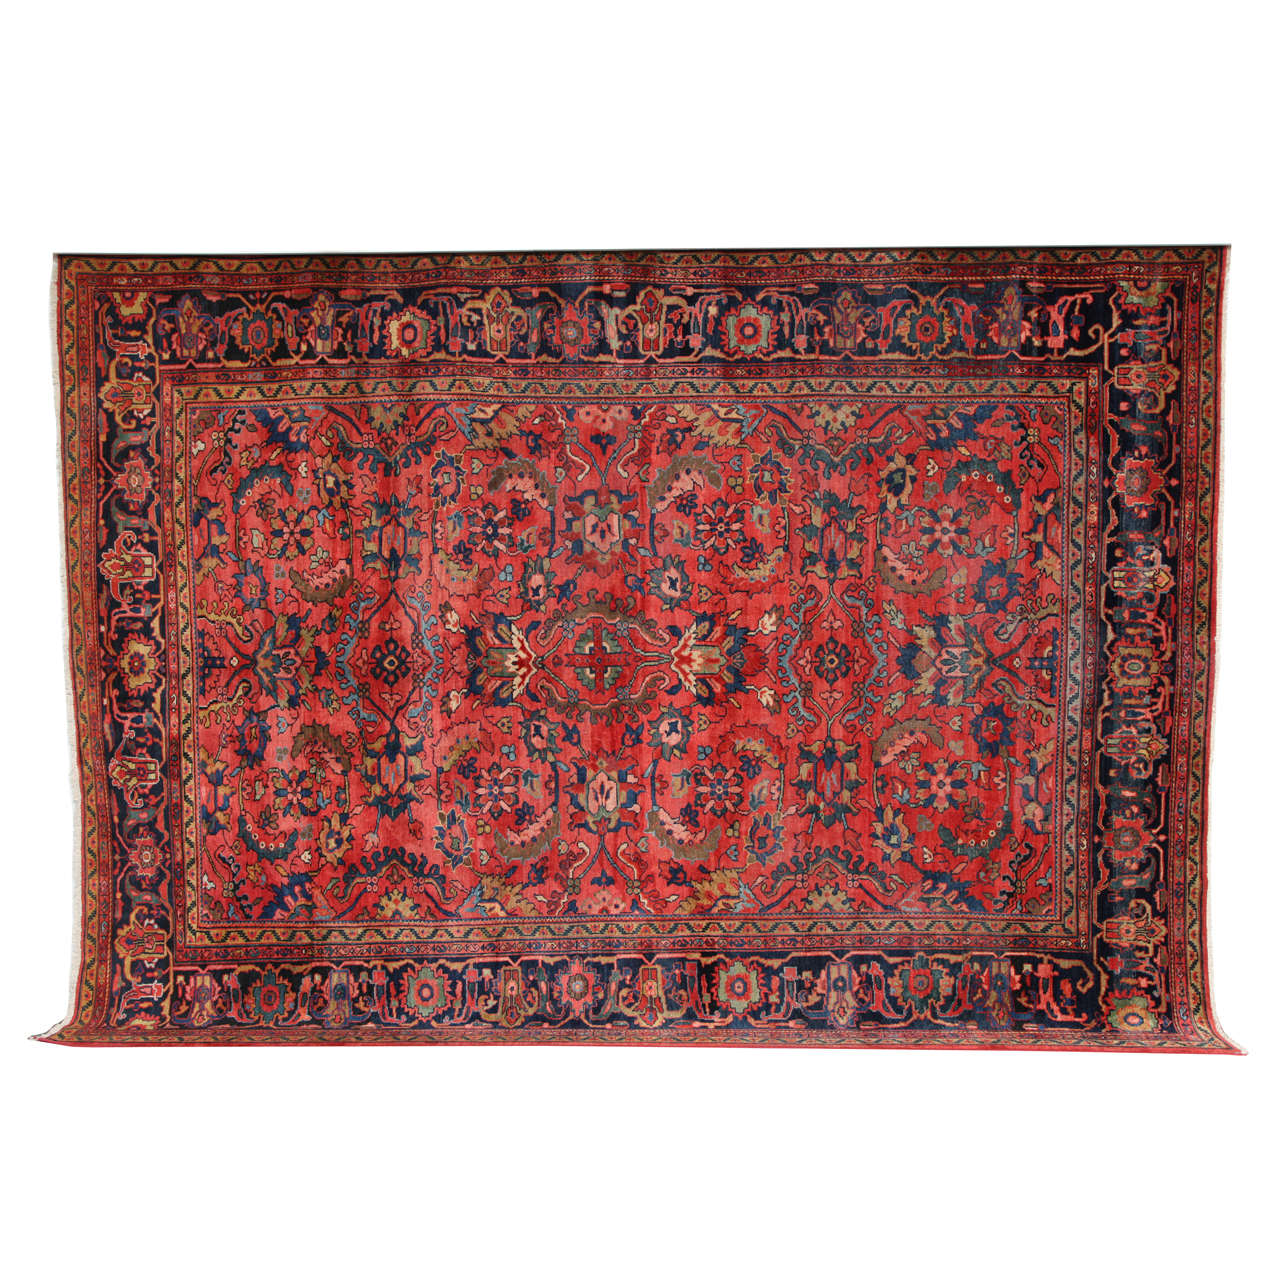 Antique Persian Lilihan Rug, Afshan Design, Circa 1910, Wool, 9' x 12'